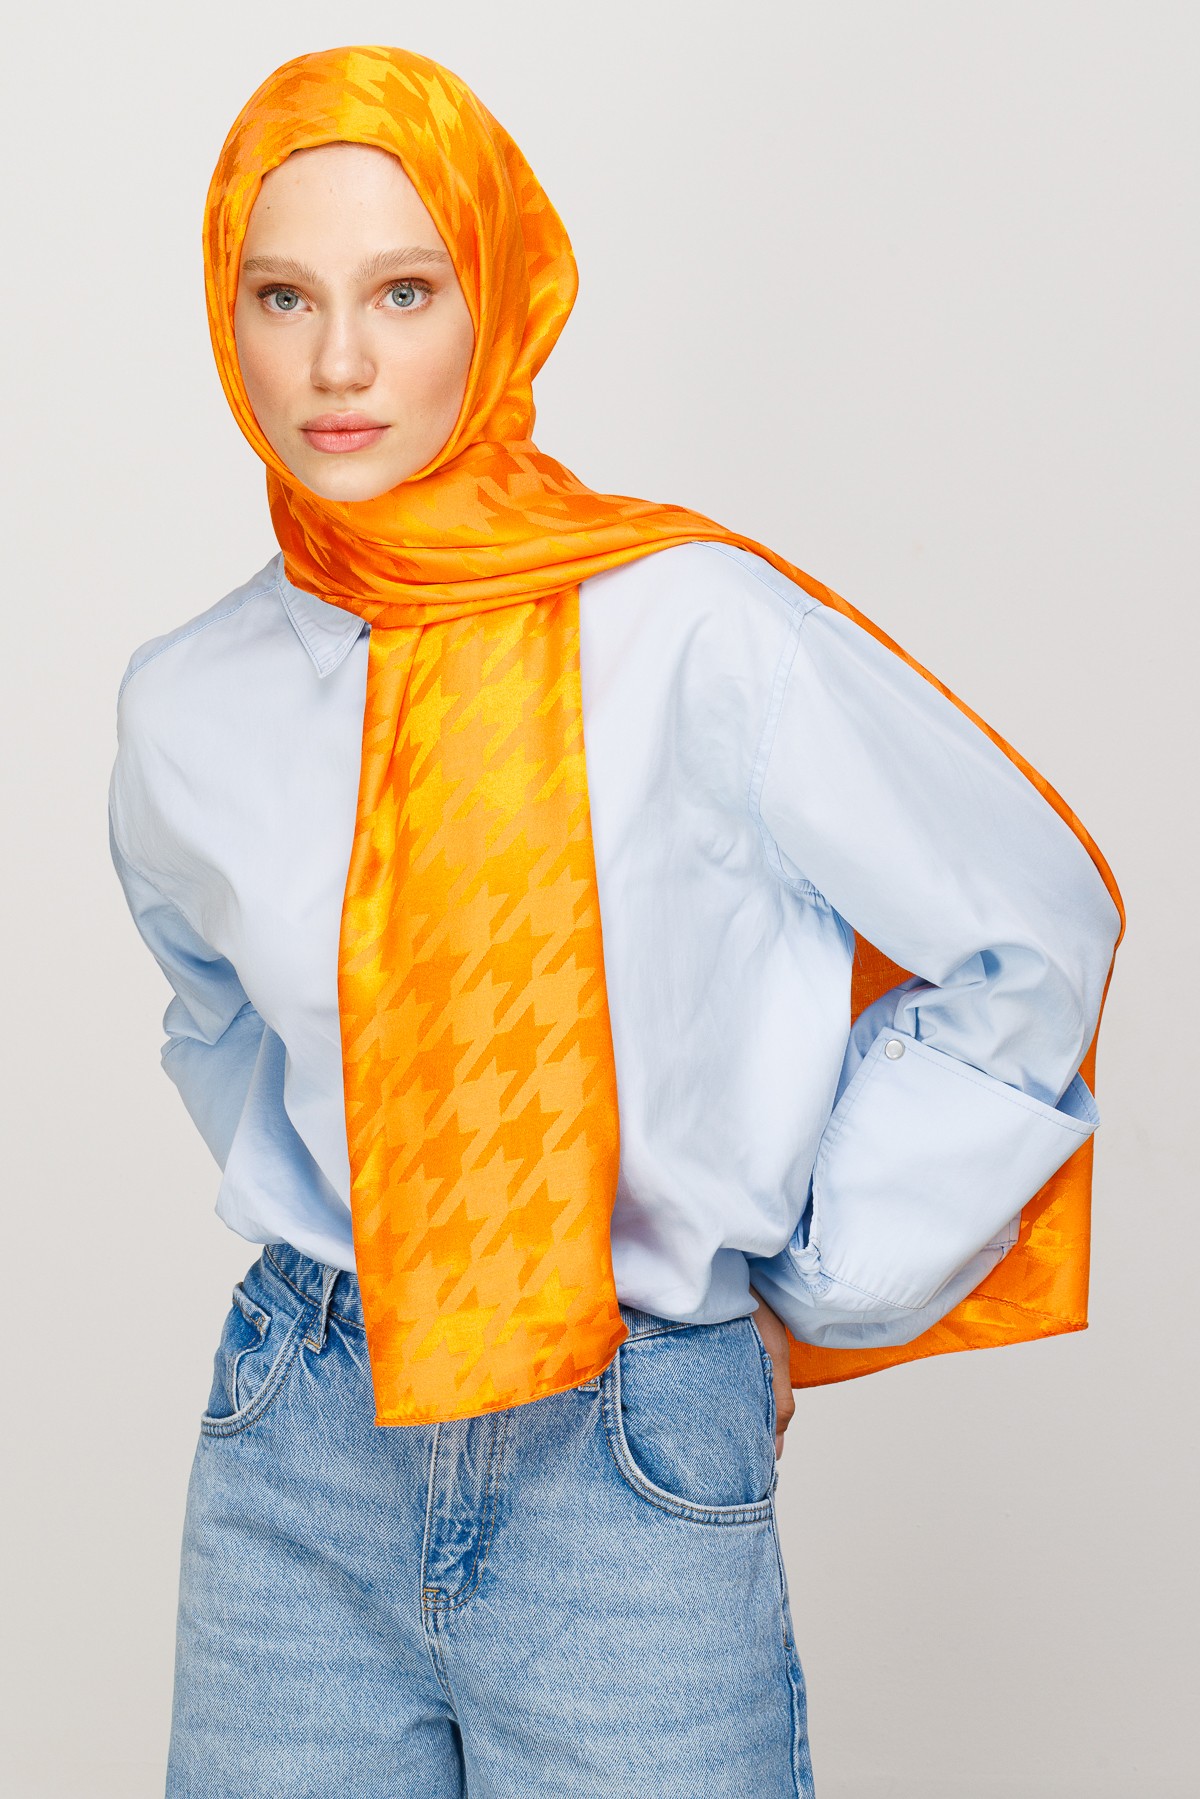 Crowbar Pattern Shiny Jacquard Hijab